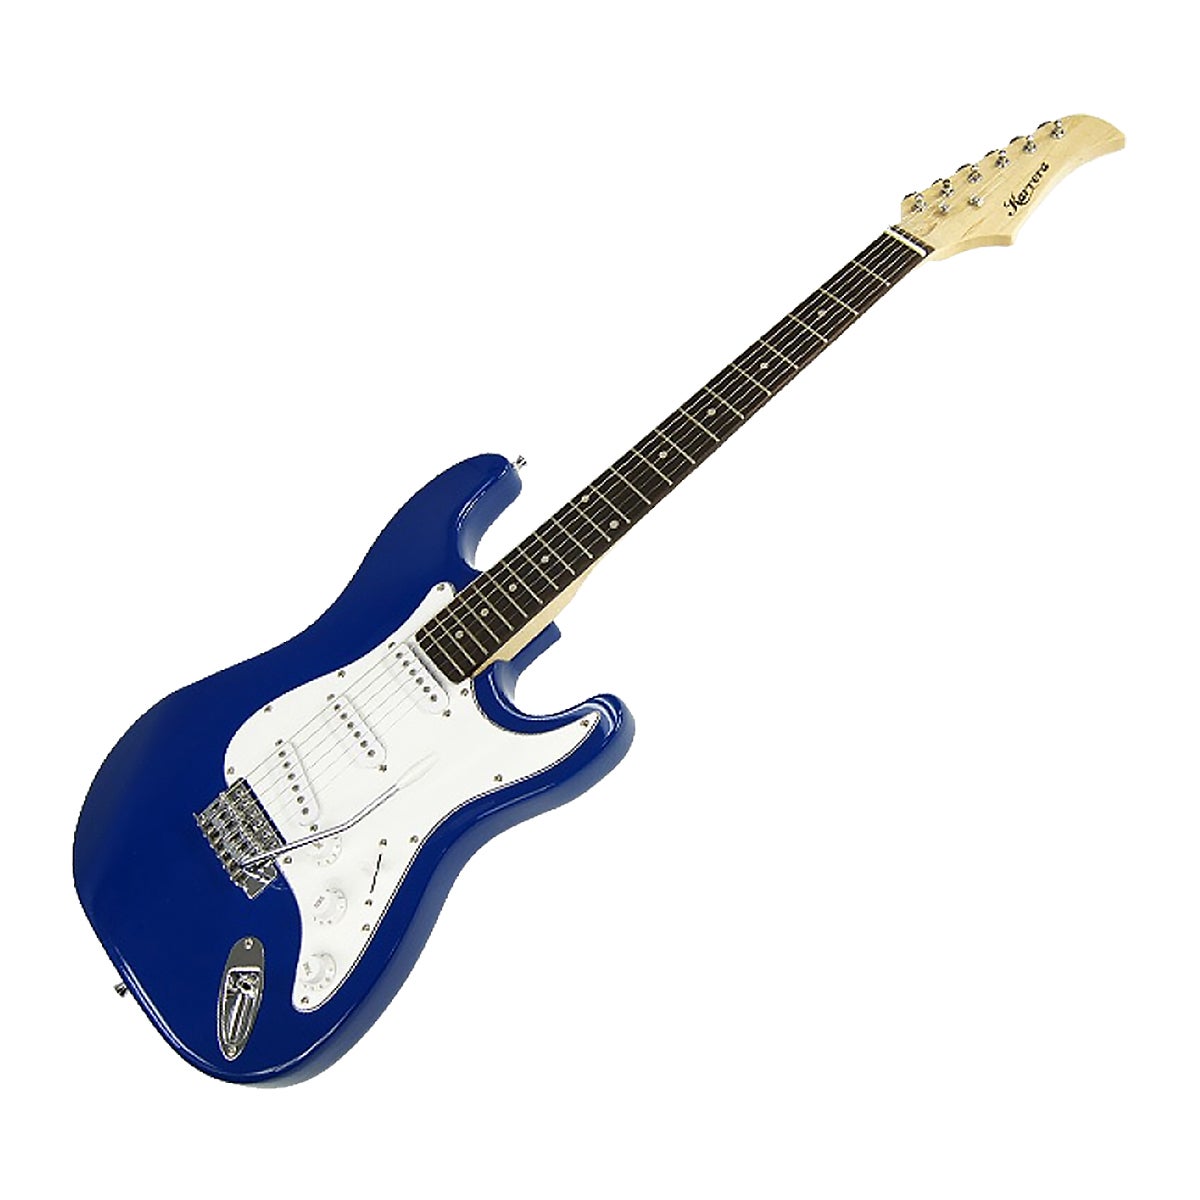 Karrera Electric Guitar Music String Instrument Blue